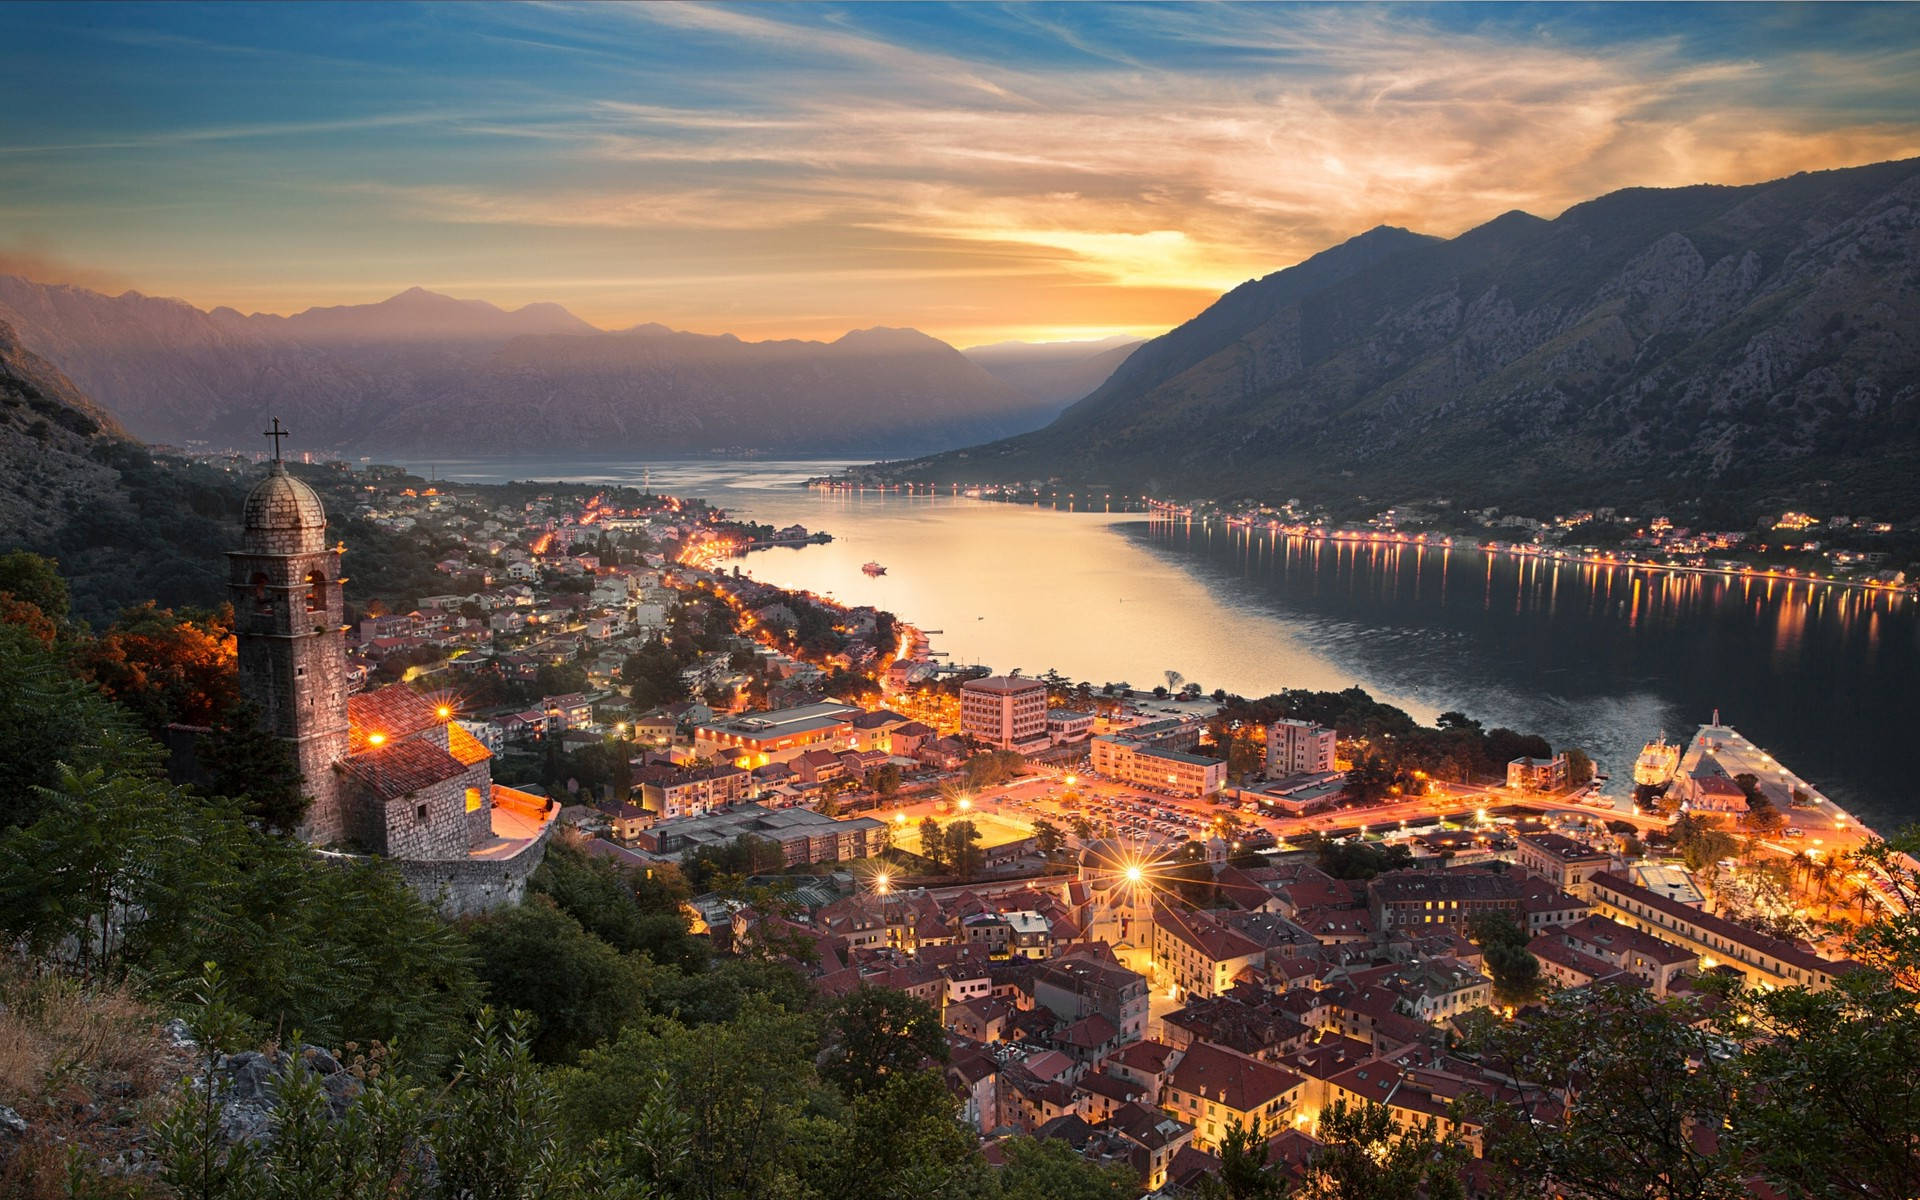 The captivatingly beautiful city of Kotor, Montenegro at night Wallpaper